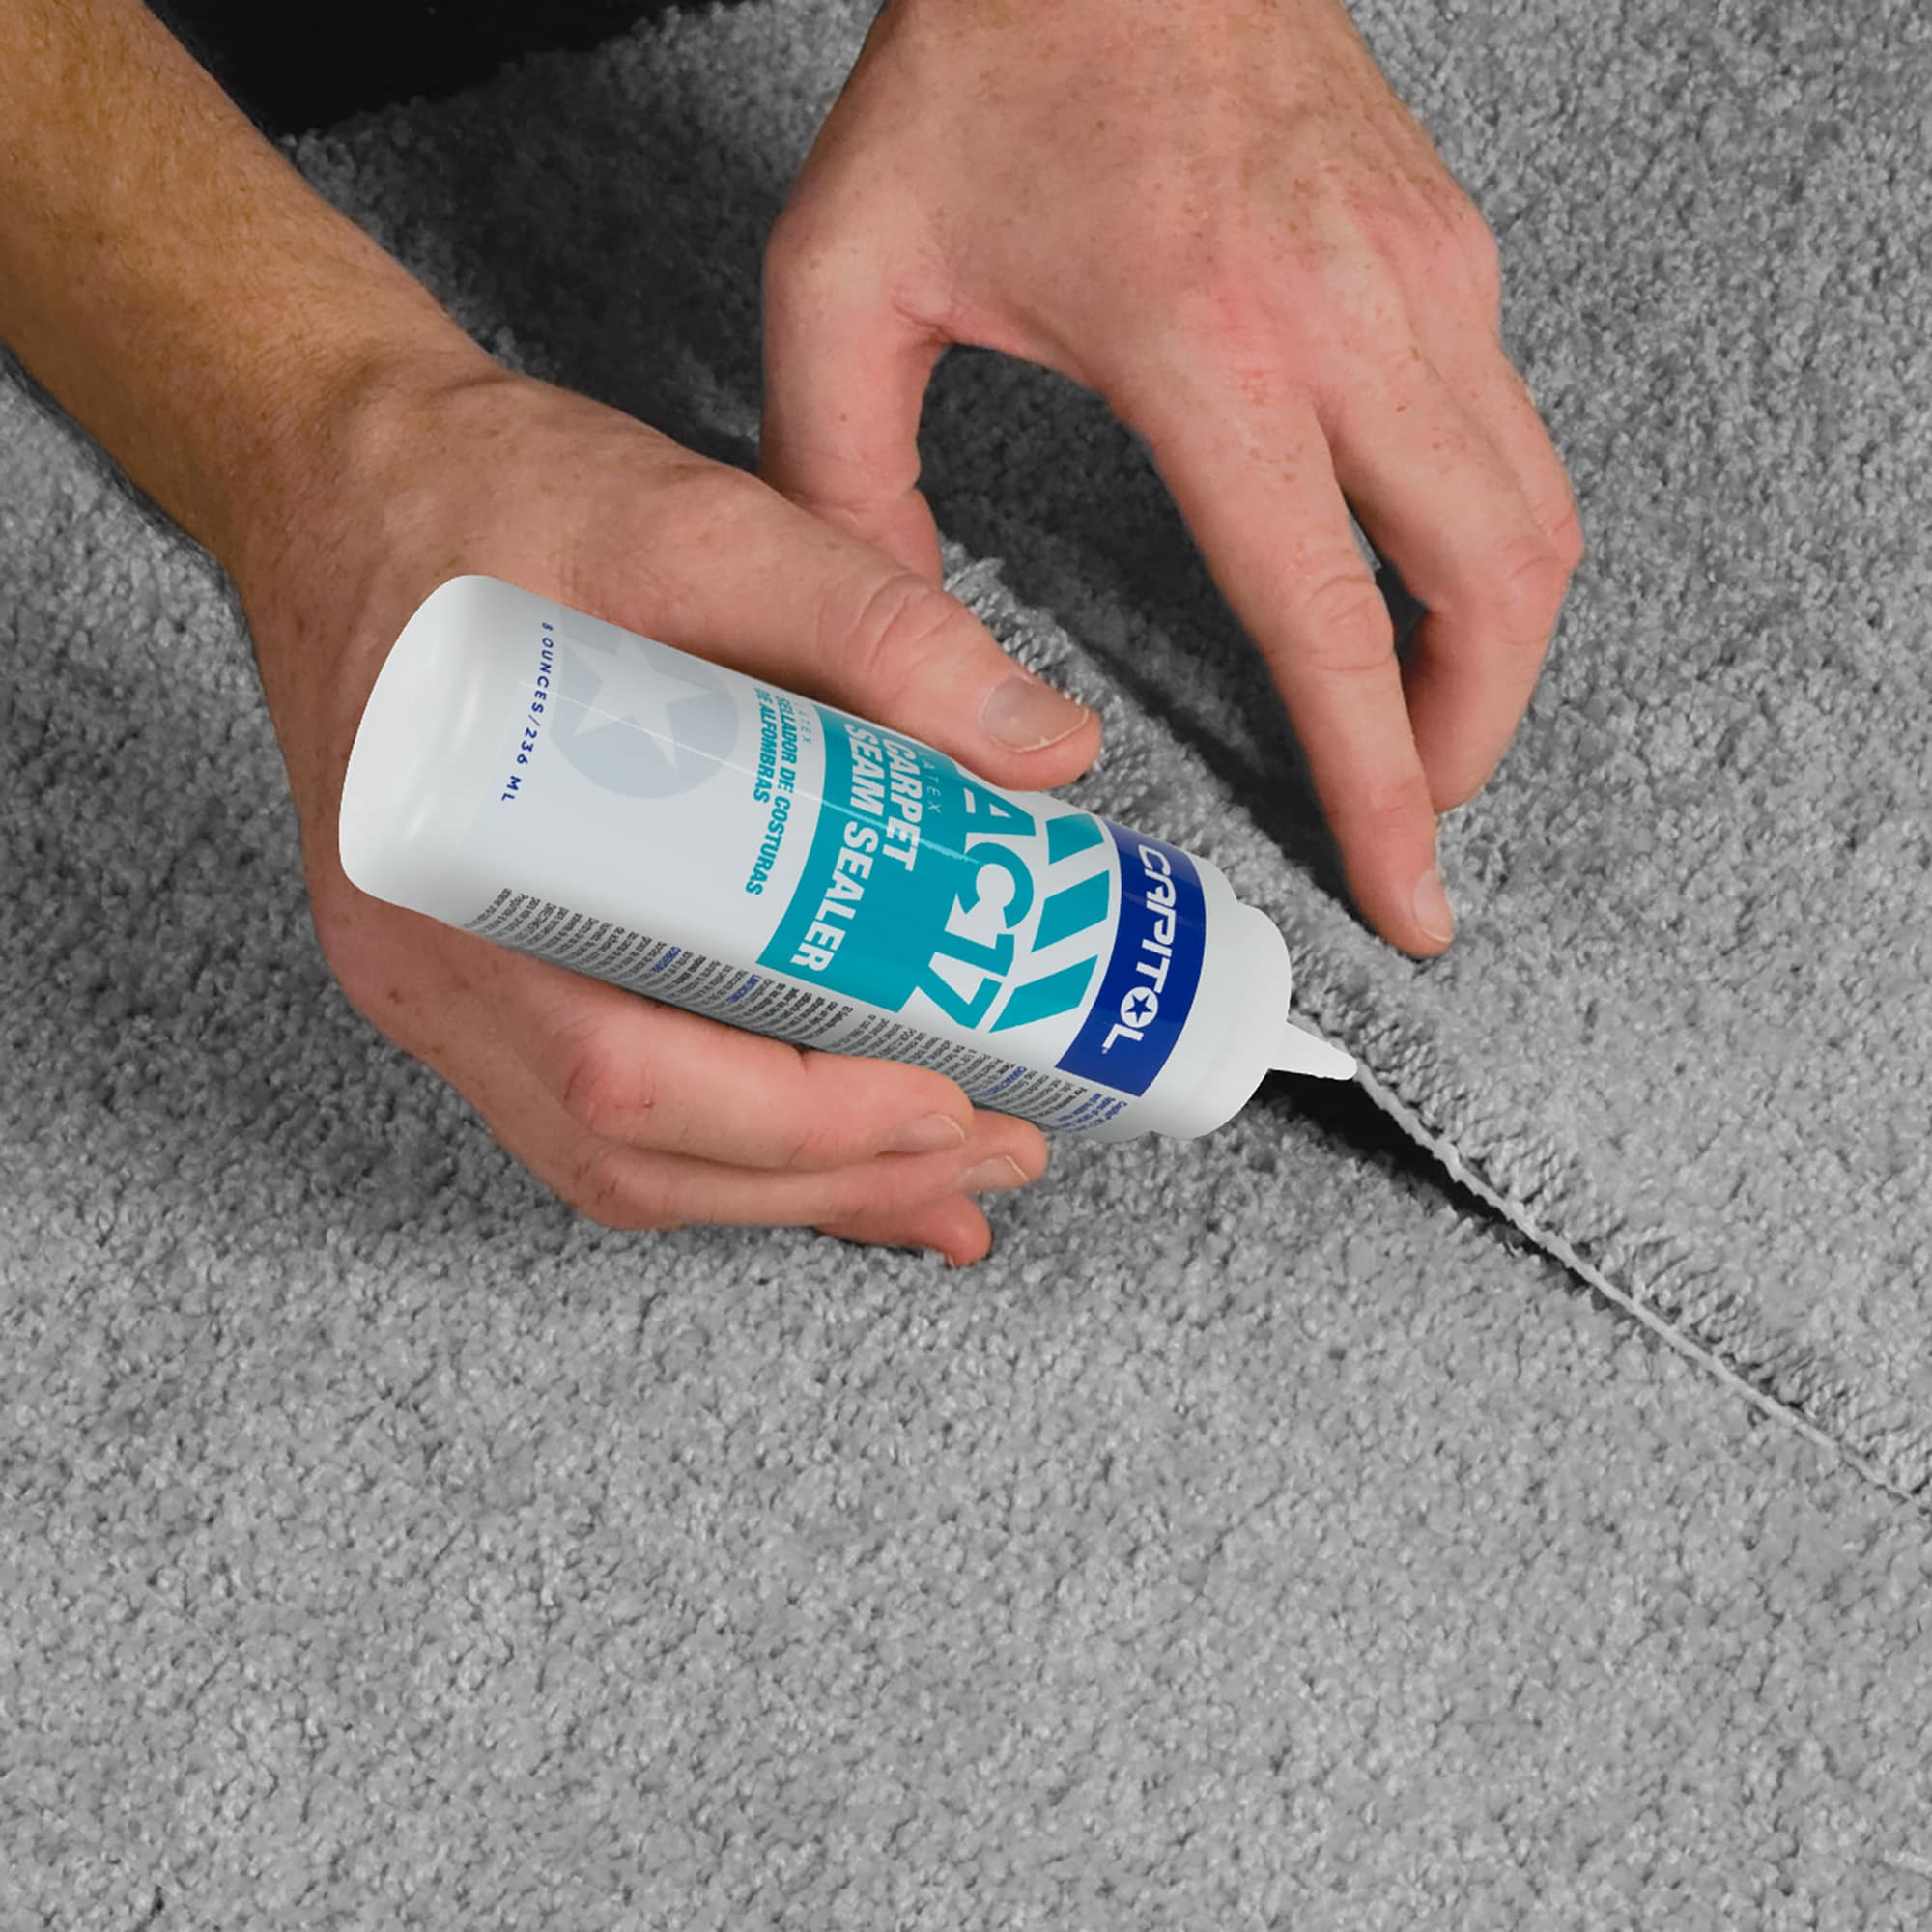 Capitol Ac17 Carpet Flooring Glue 8 Oz In The Adhesives Department At Lowes Com